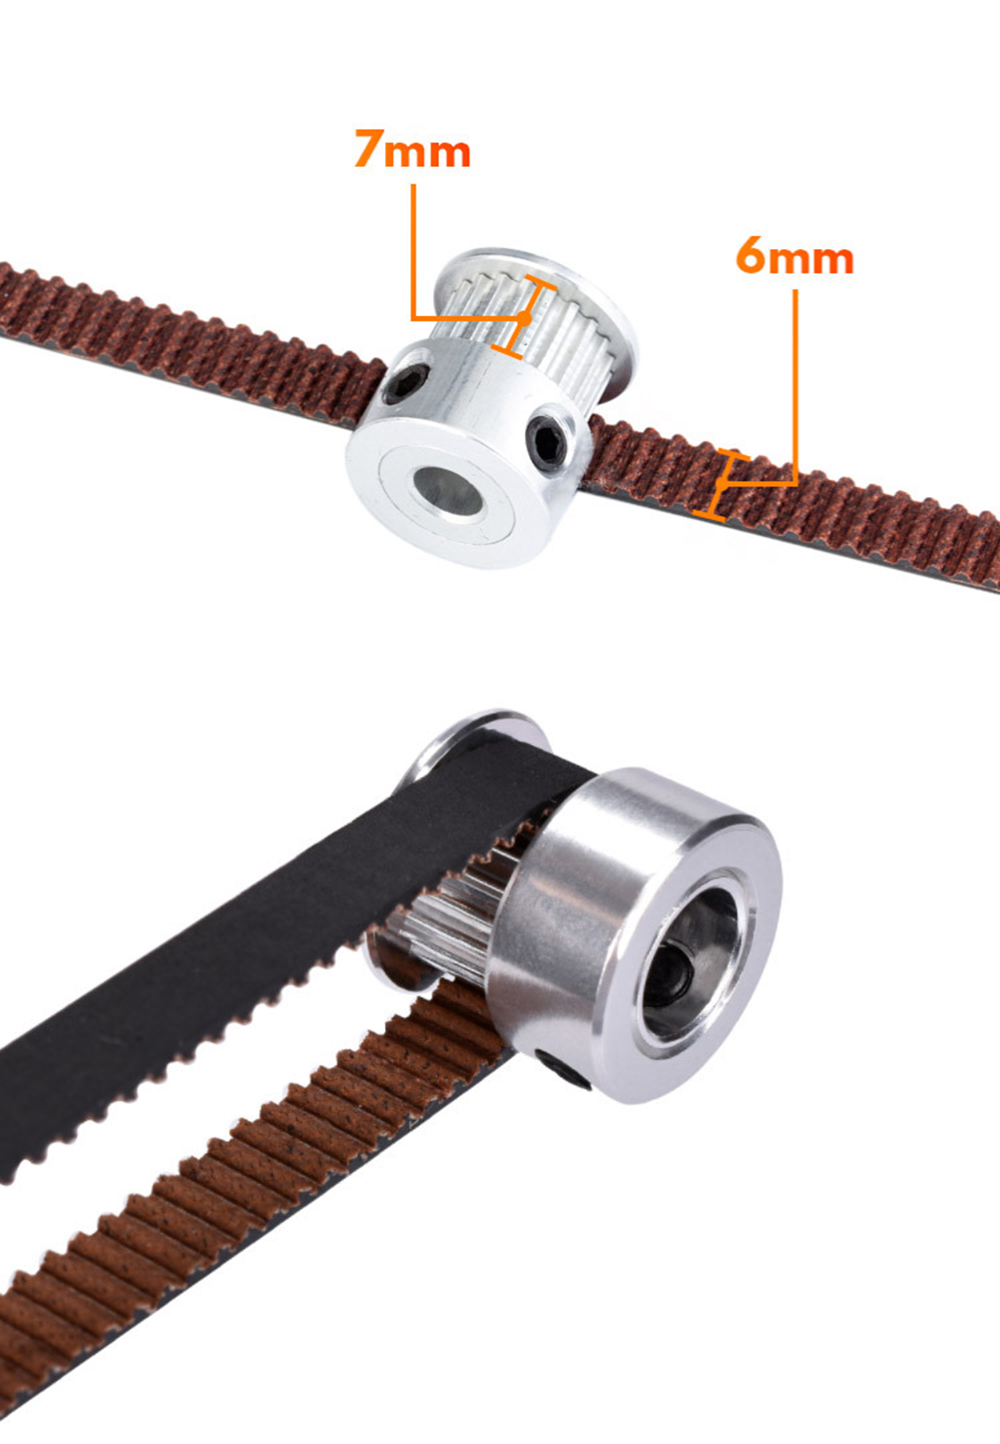 Machifit-GT2-6mm-Closed-Loop-Timing-Belt-Non-slip-Version-2GT-1101121221582002803003204006108521220m-1536991-9